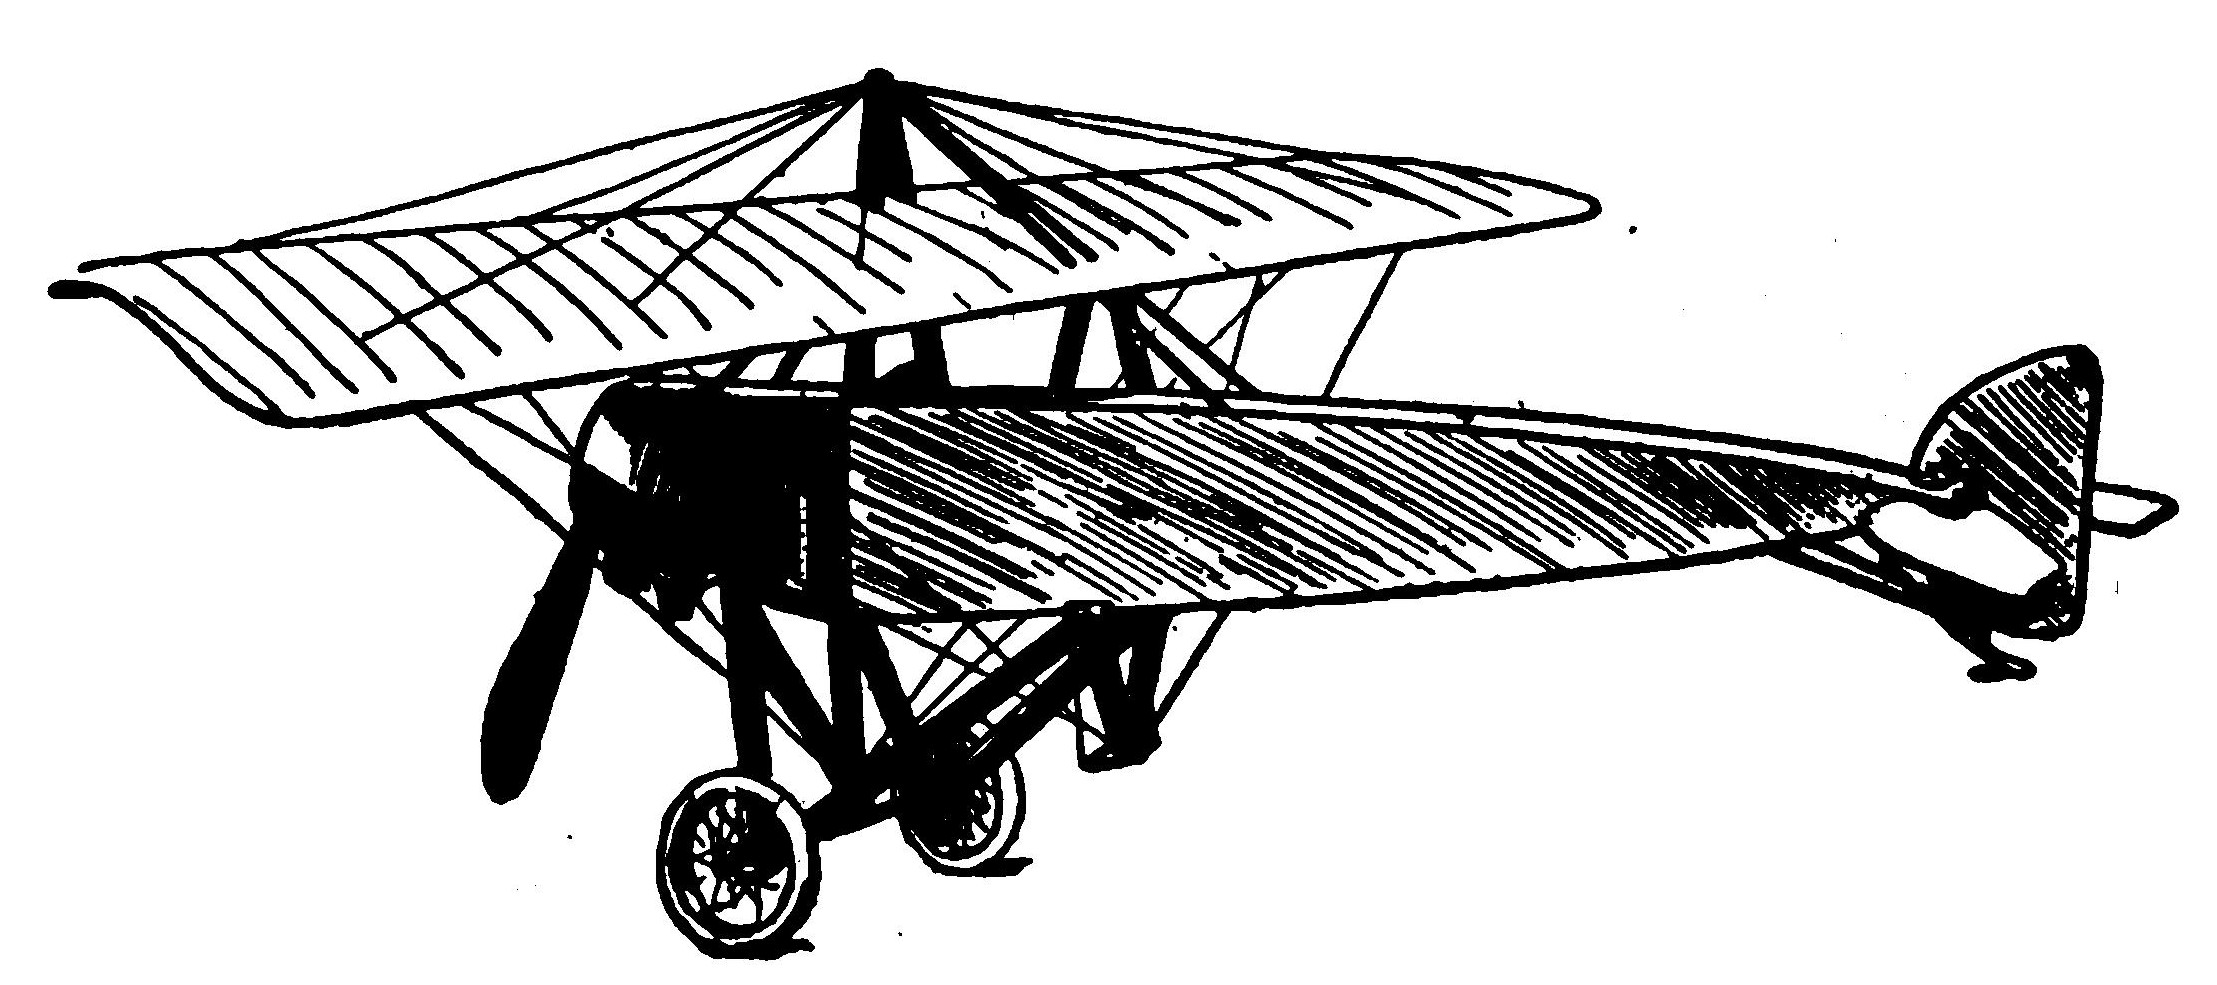 Fig. 4. Morane Umbrella Type Monoplane. Courtesy of "Flight."